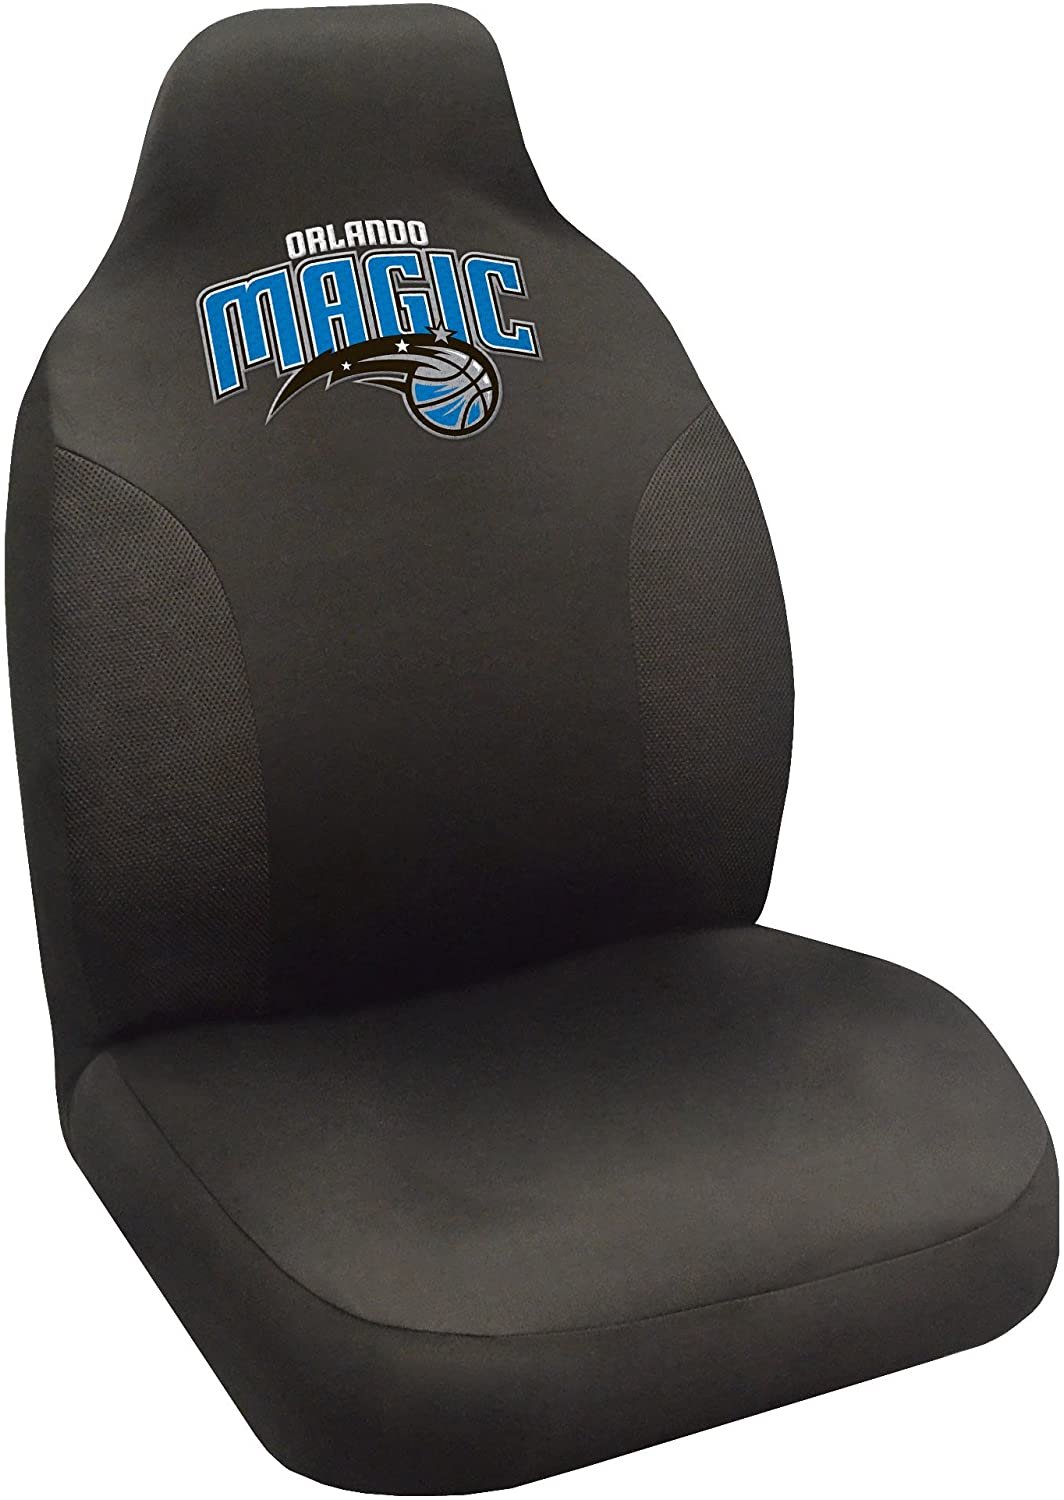 Fan Mats 15130 'NBA Orlando Magic' Seat Cover